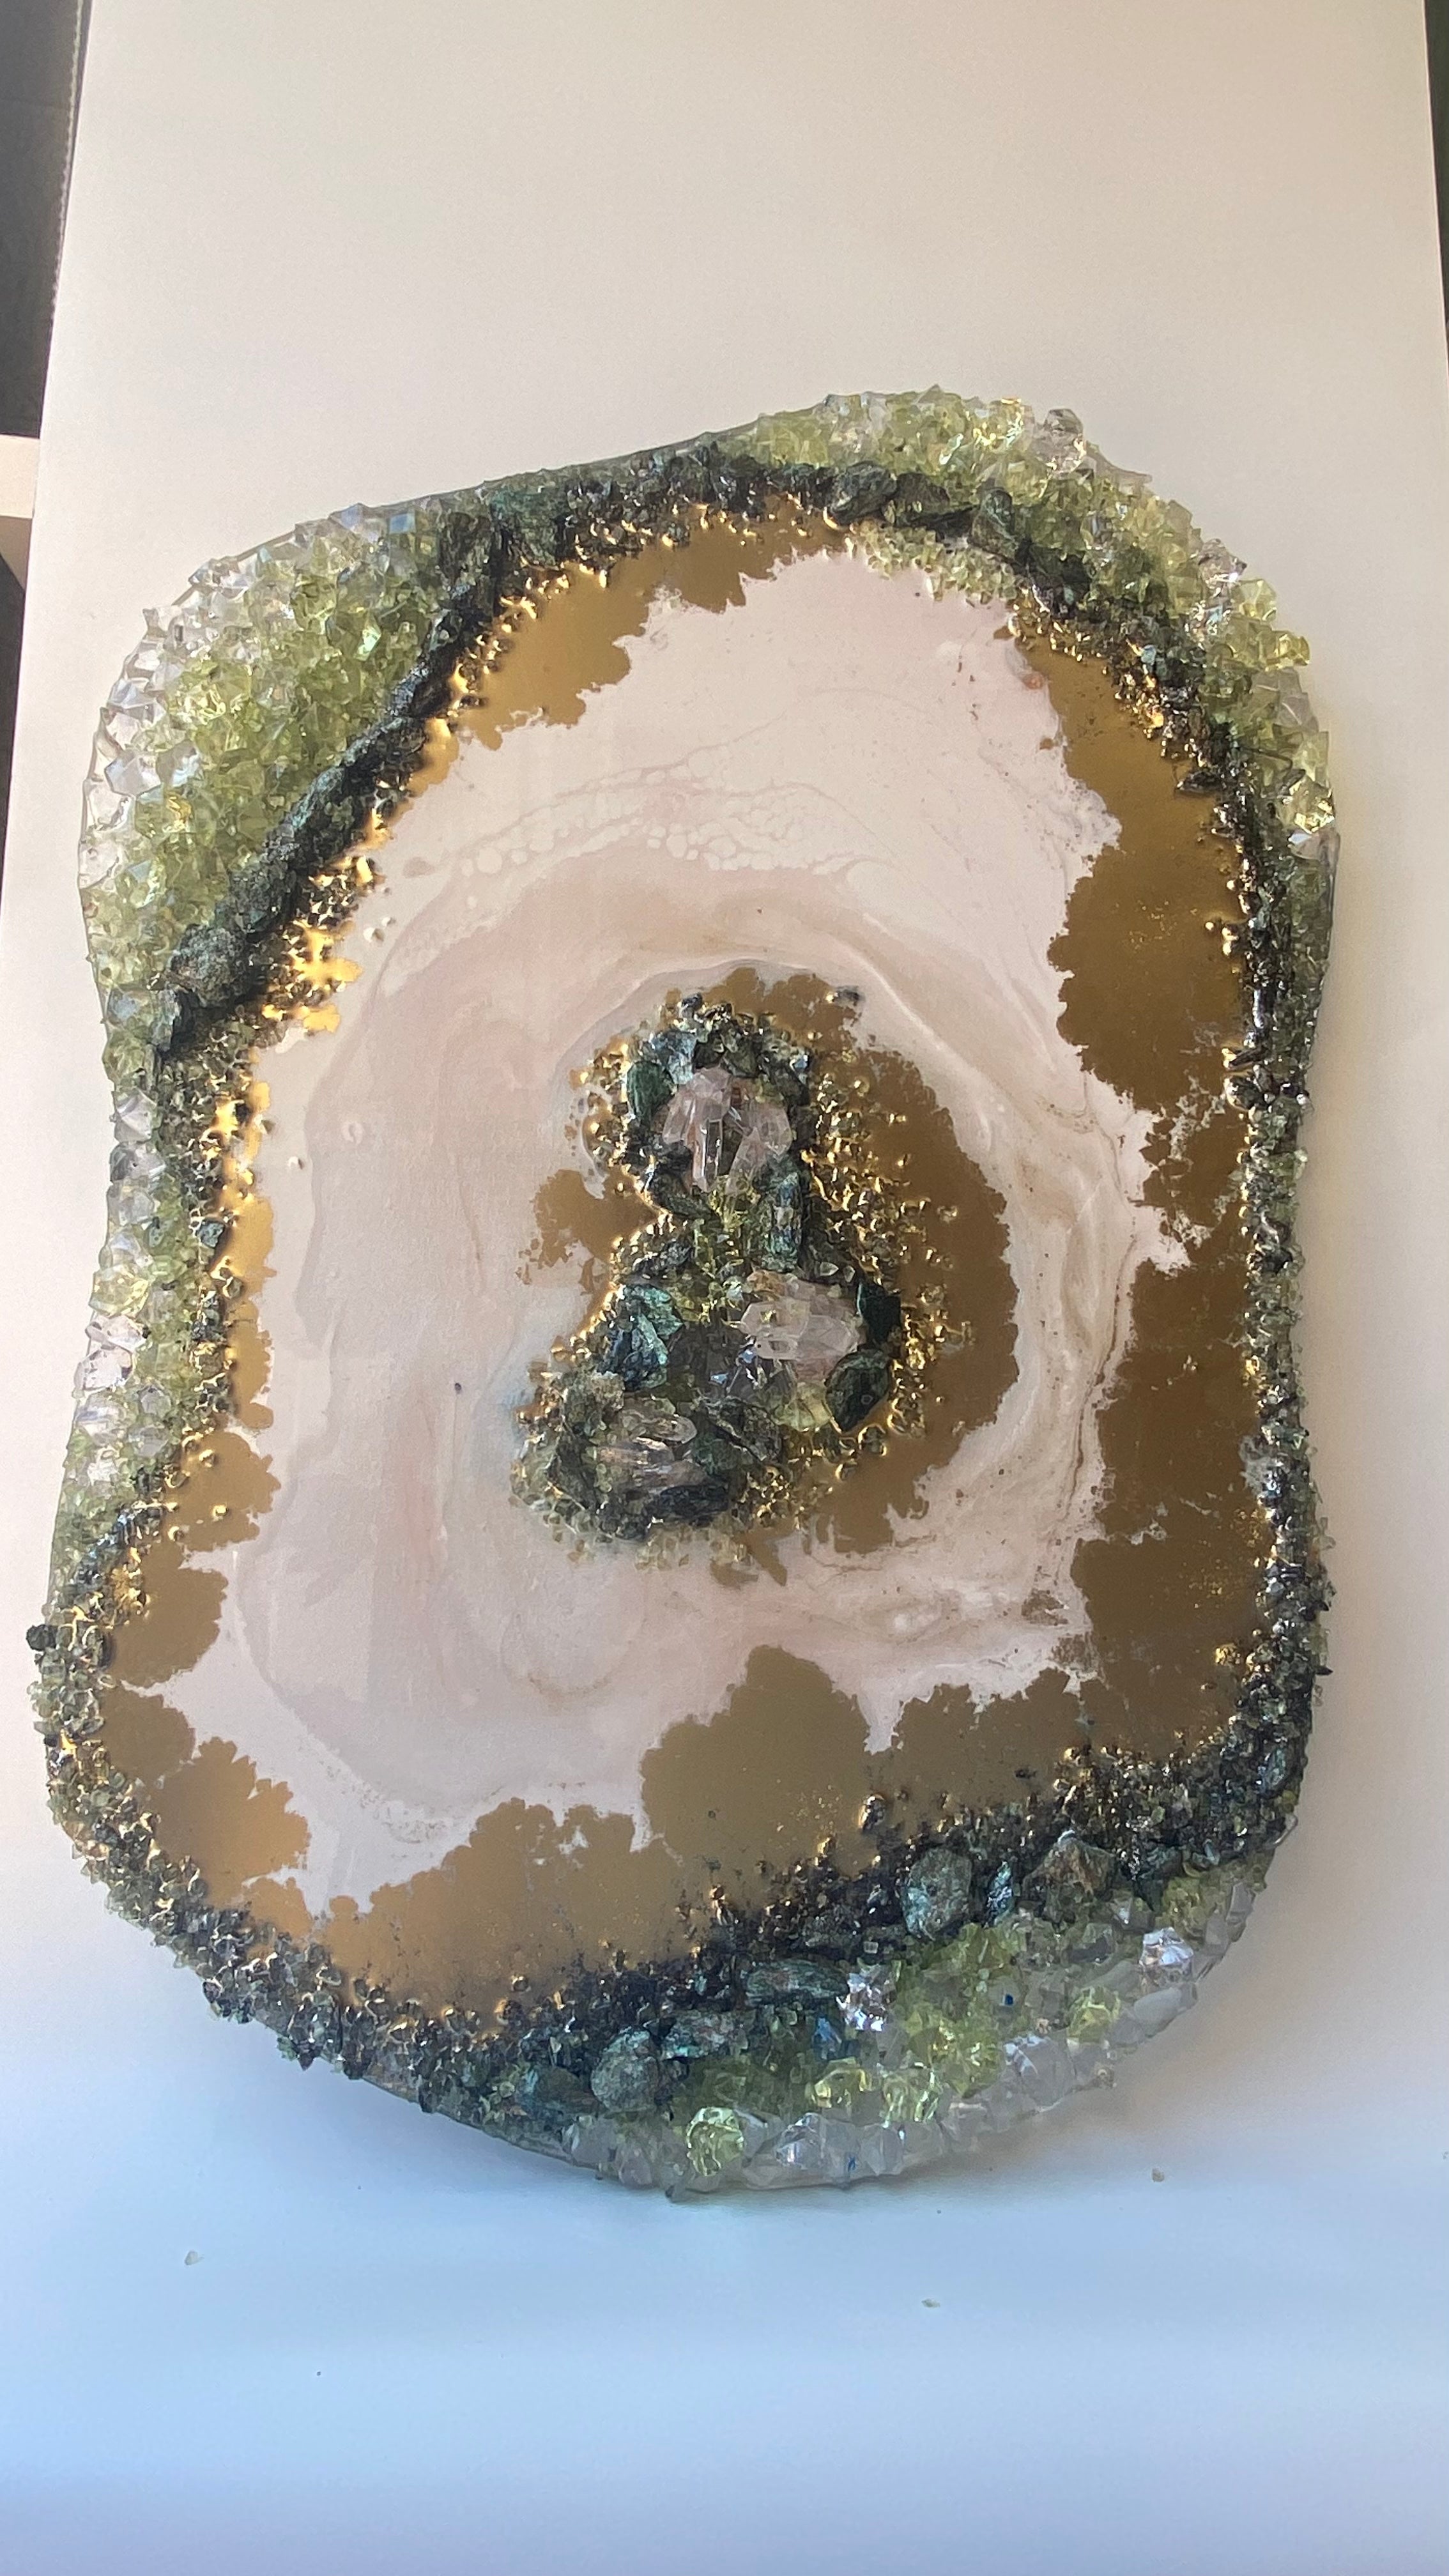 Green Harmony Crystal Artwork - Freeform Geode Crystal with Peridot, Fuschite and Quartz